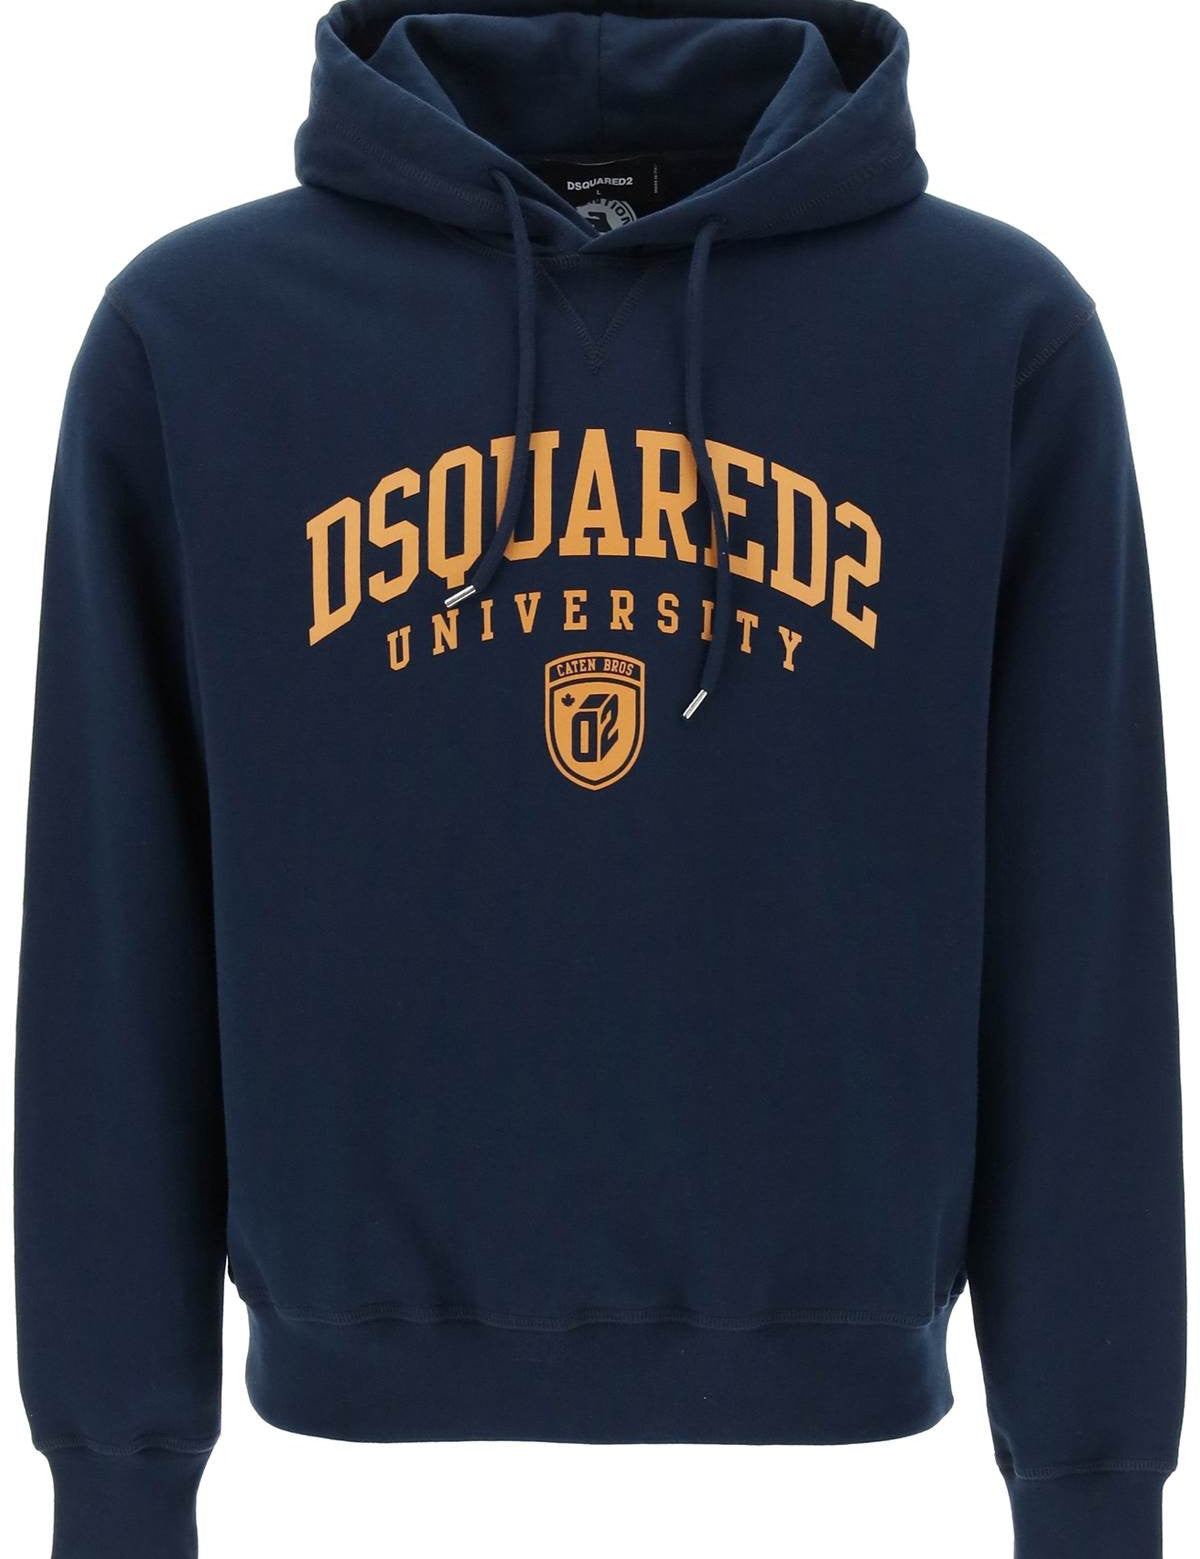 dsquared2-university-cool-fit-hoodie.jpg